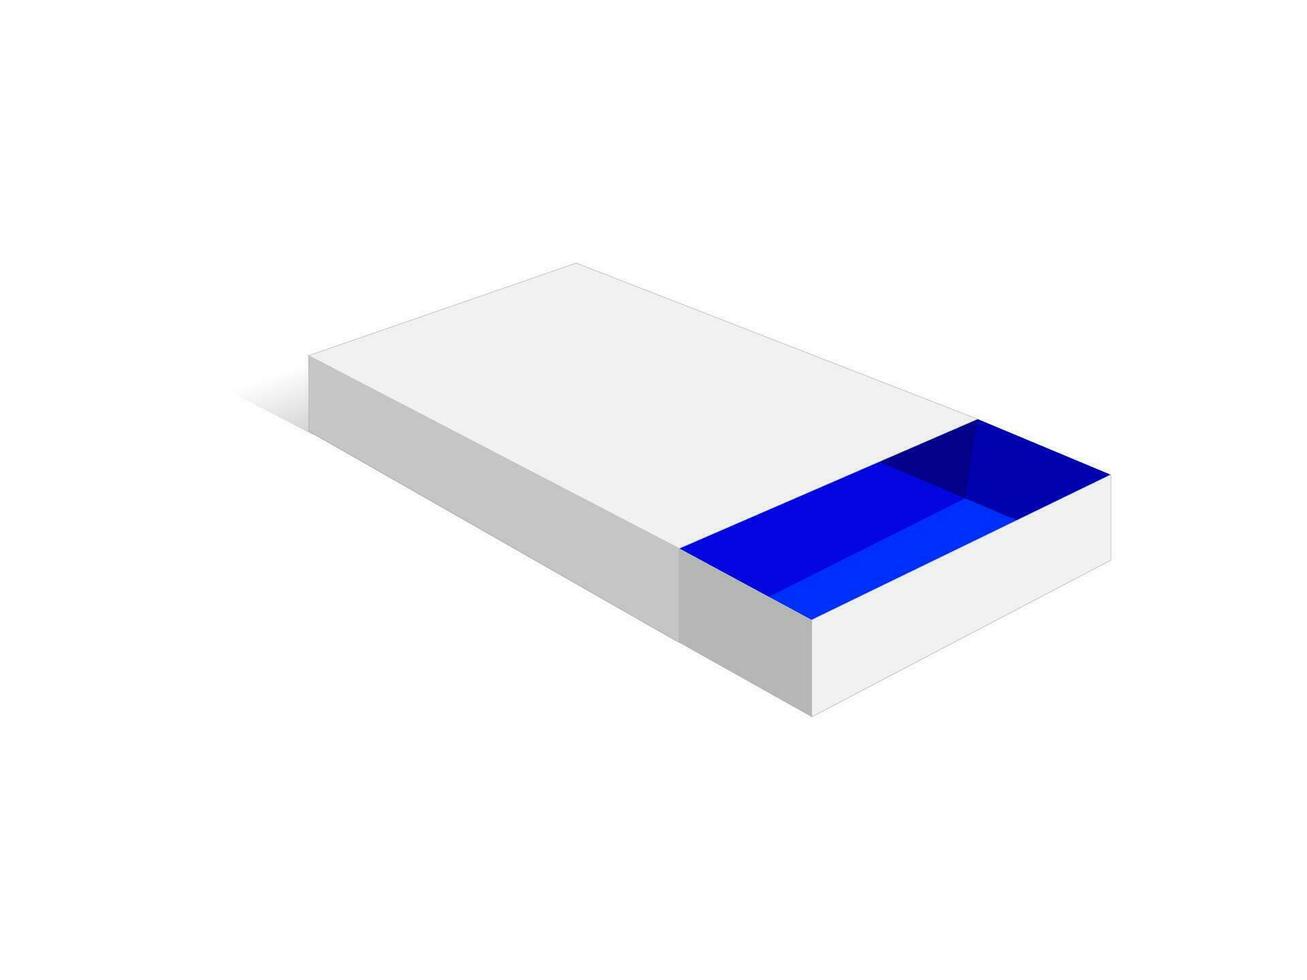 Match Box, Drawer box, sliding box, 3d box, vector